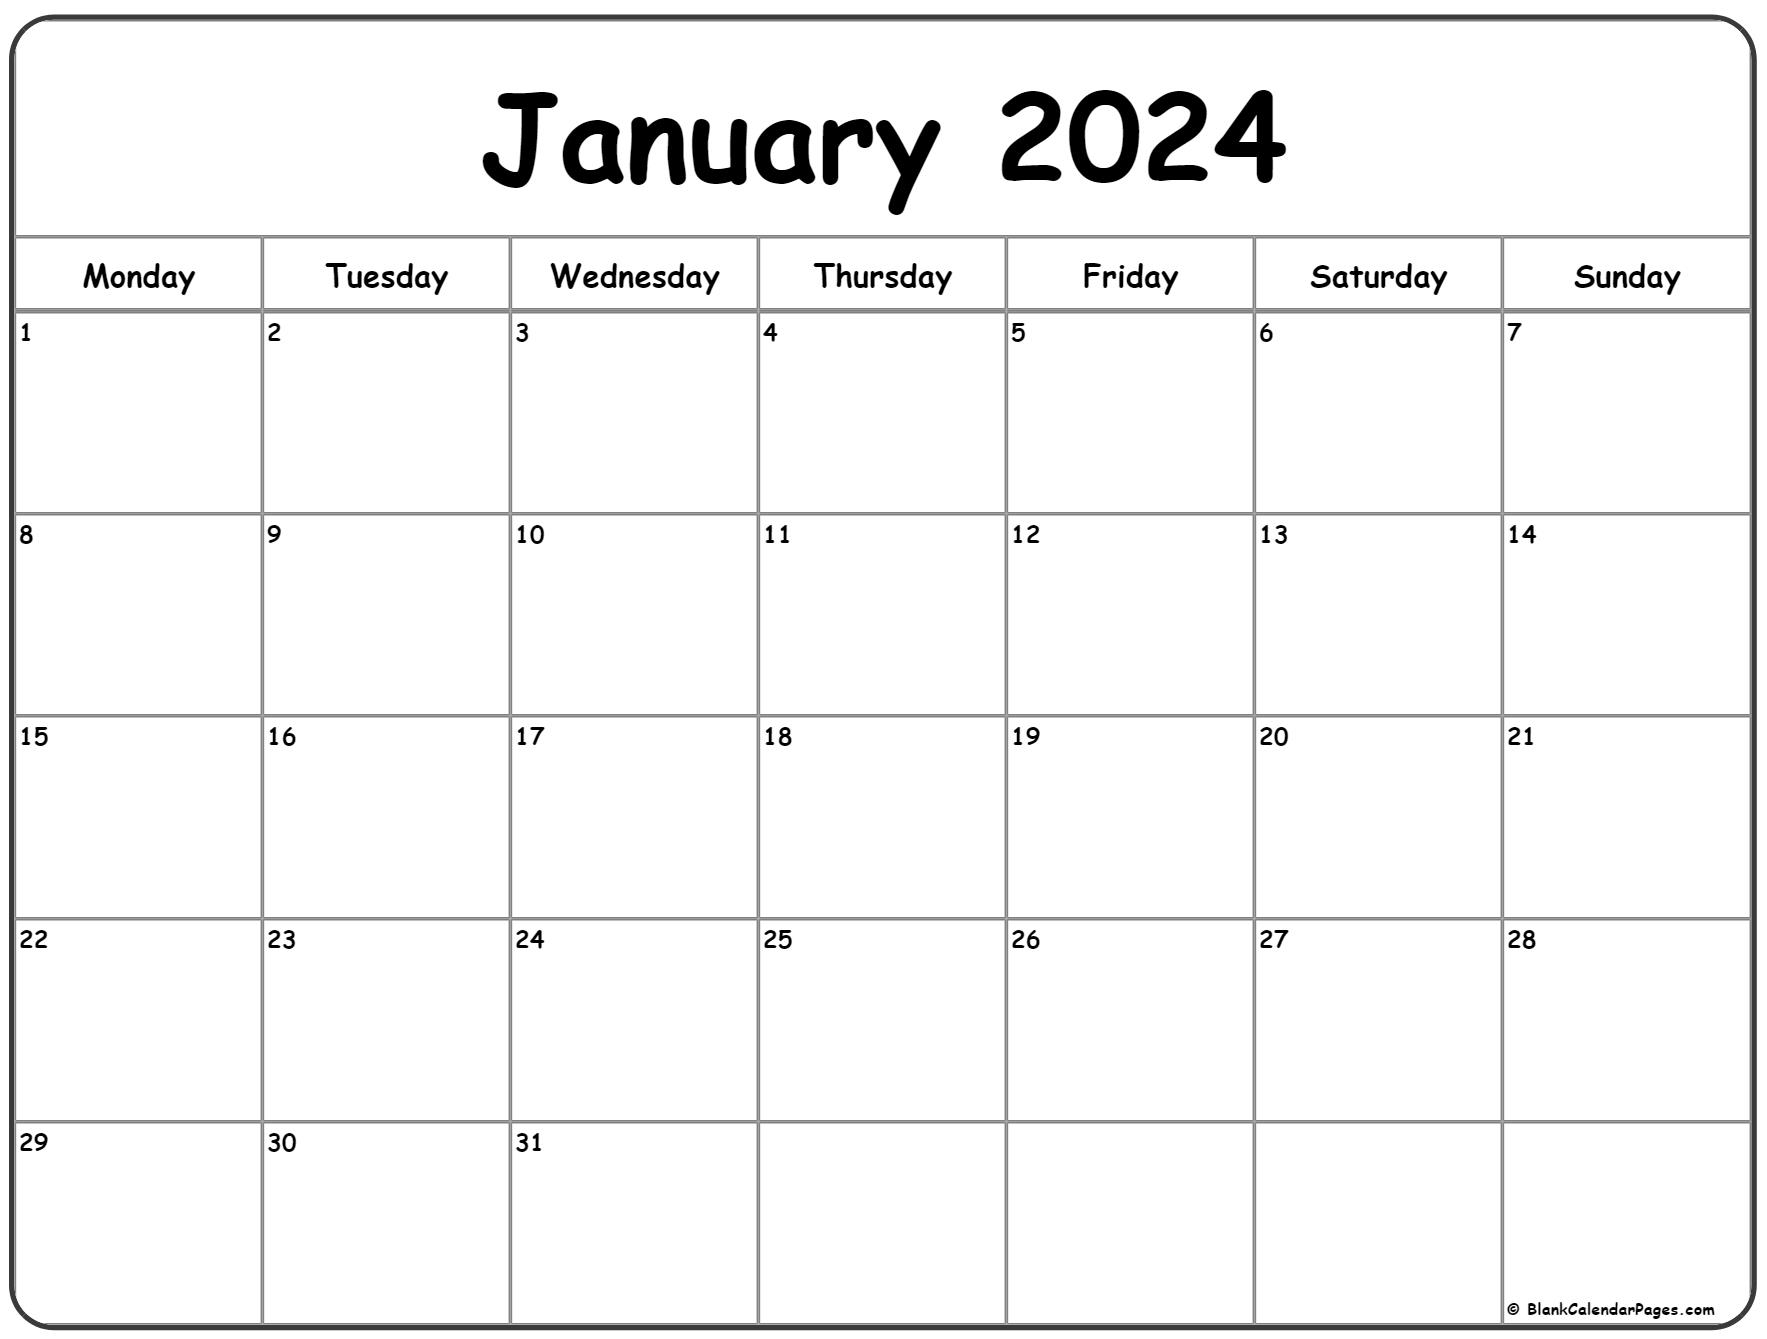 January 2024 Monday Calendar | Monday To Sunday for Calendar Free Printable January 2024